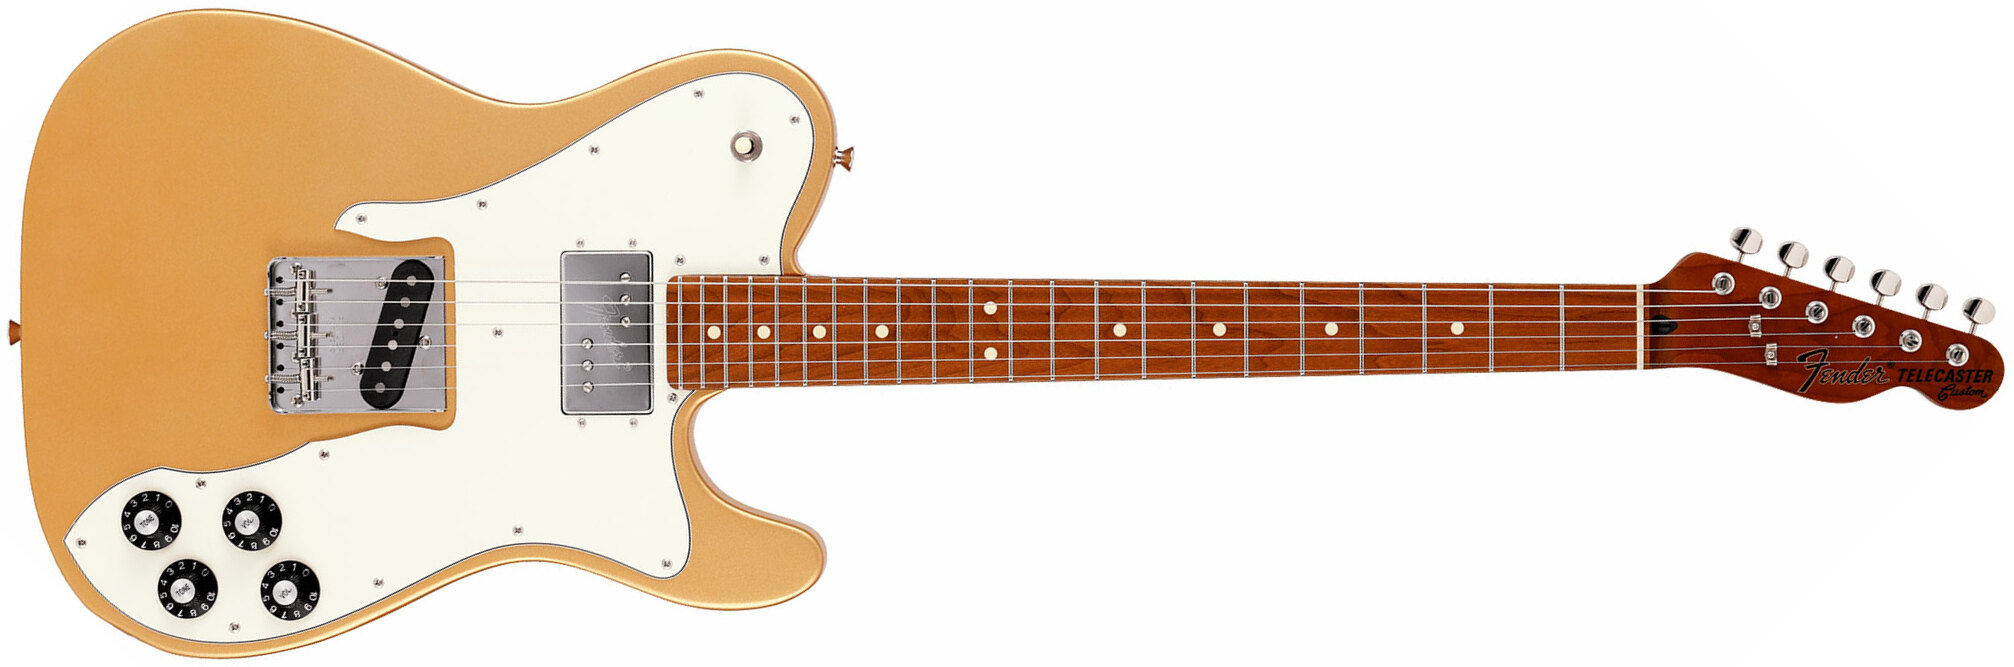 Fender Tele Hybrid Custom Jap Ltd Ht Hs Mn - Gold - Tel shape electric guitar - Main picture